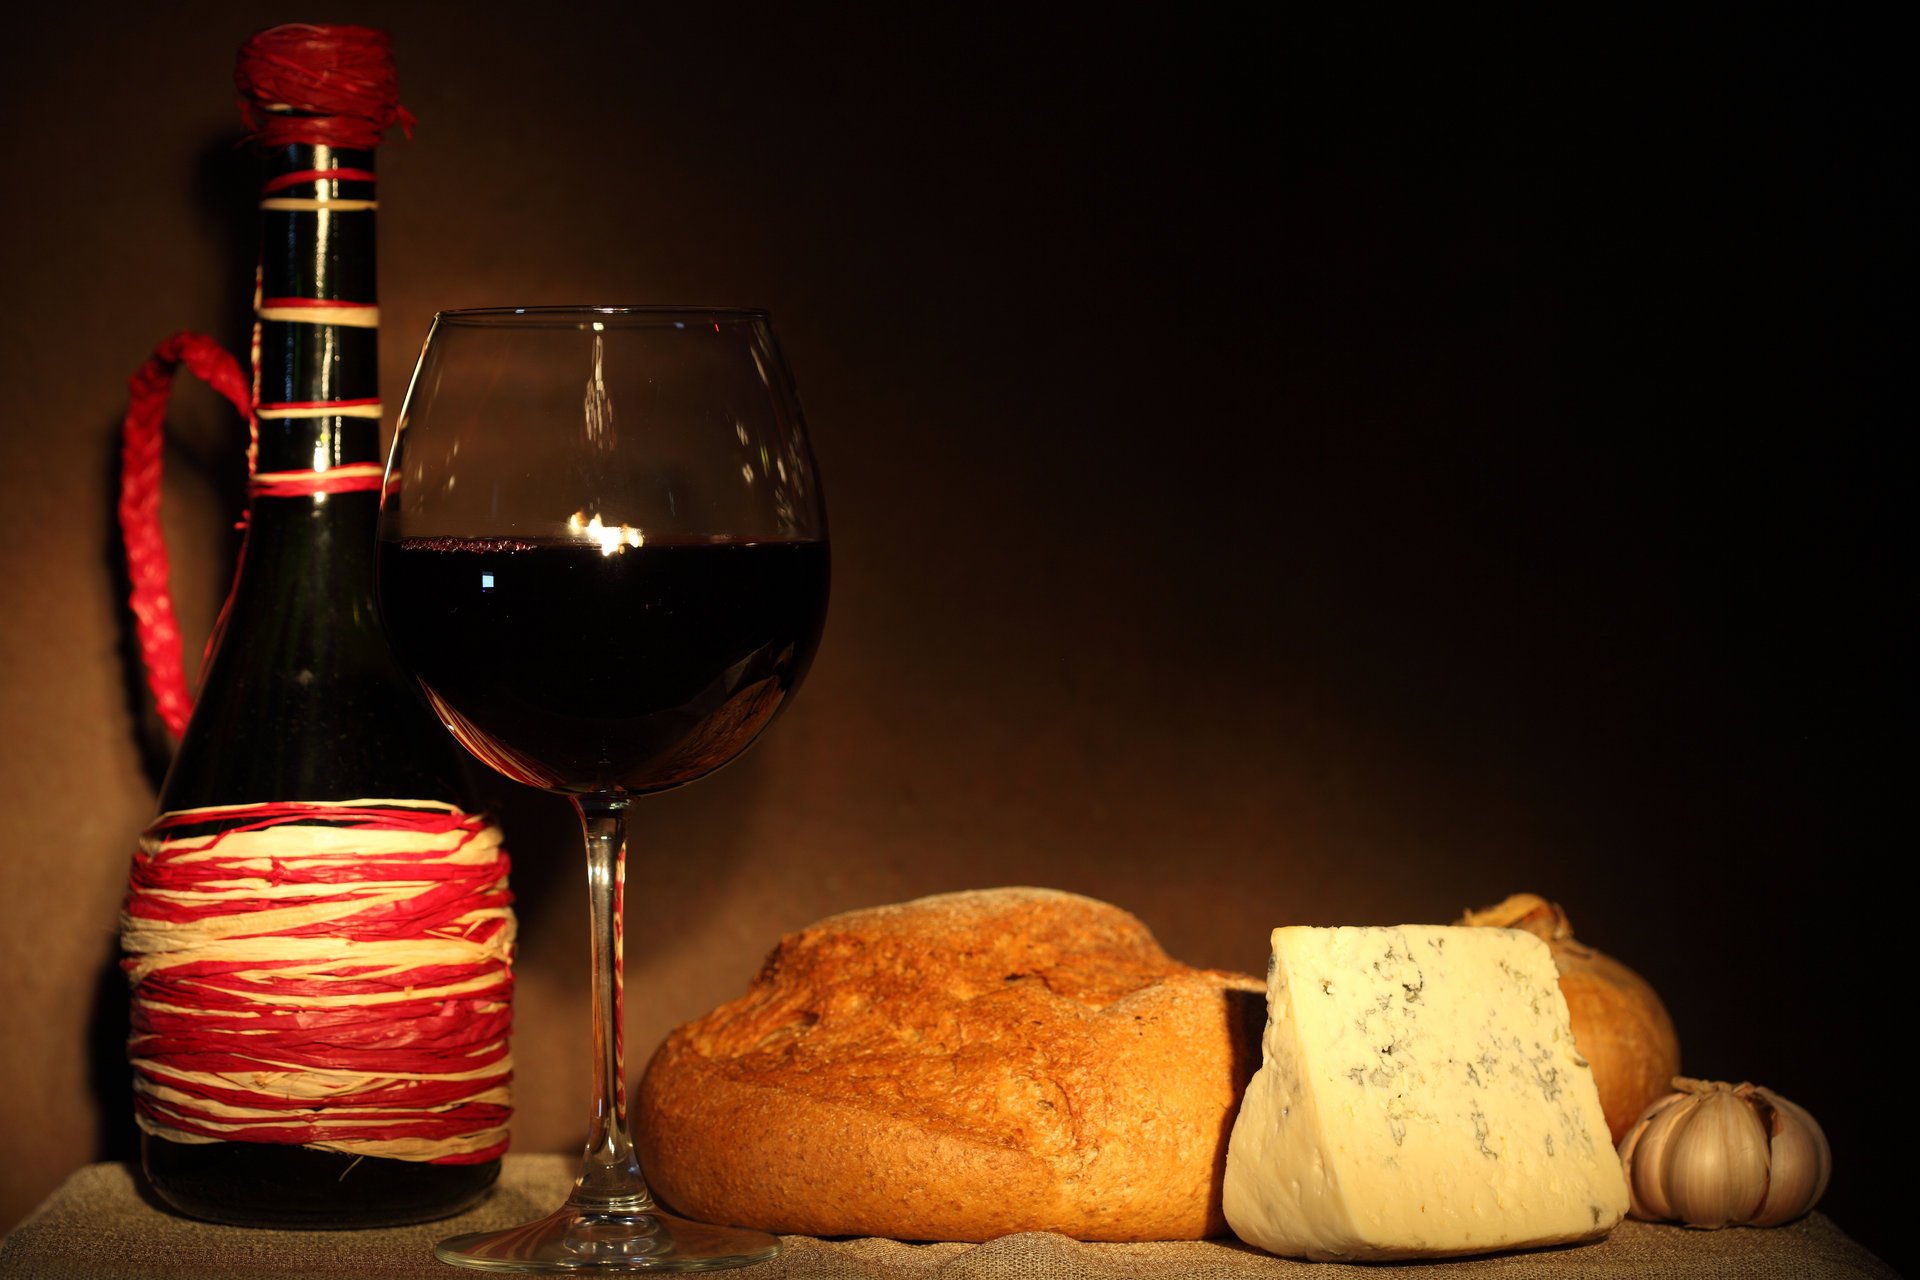 Красивое изображение вина и хлеба